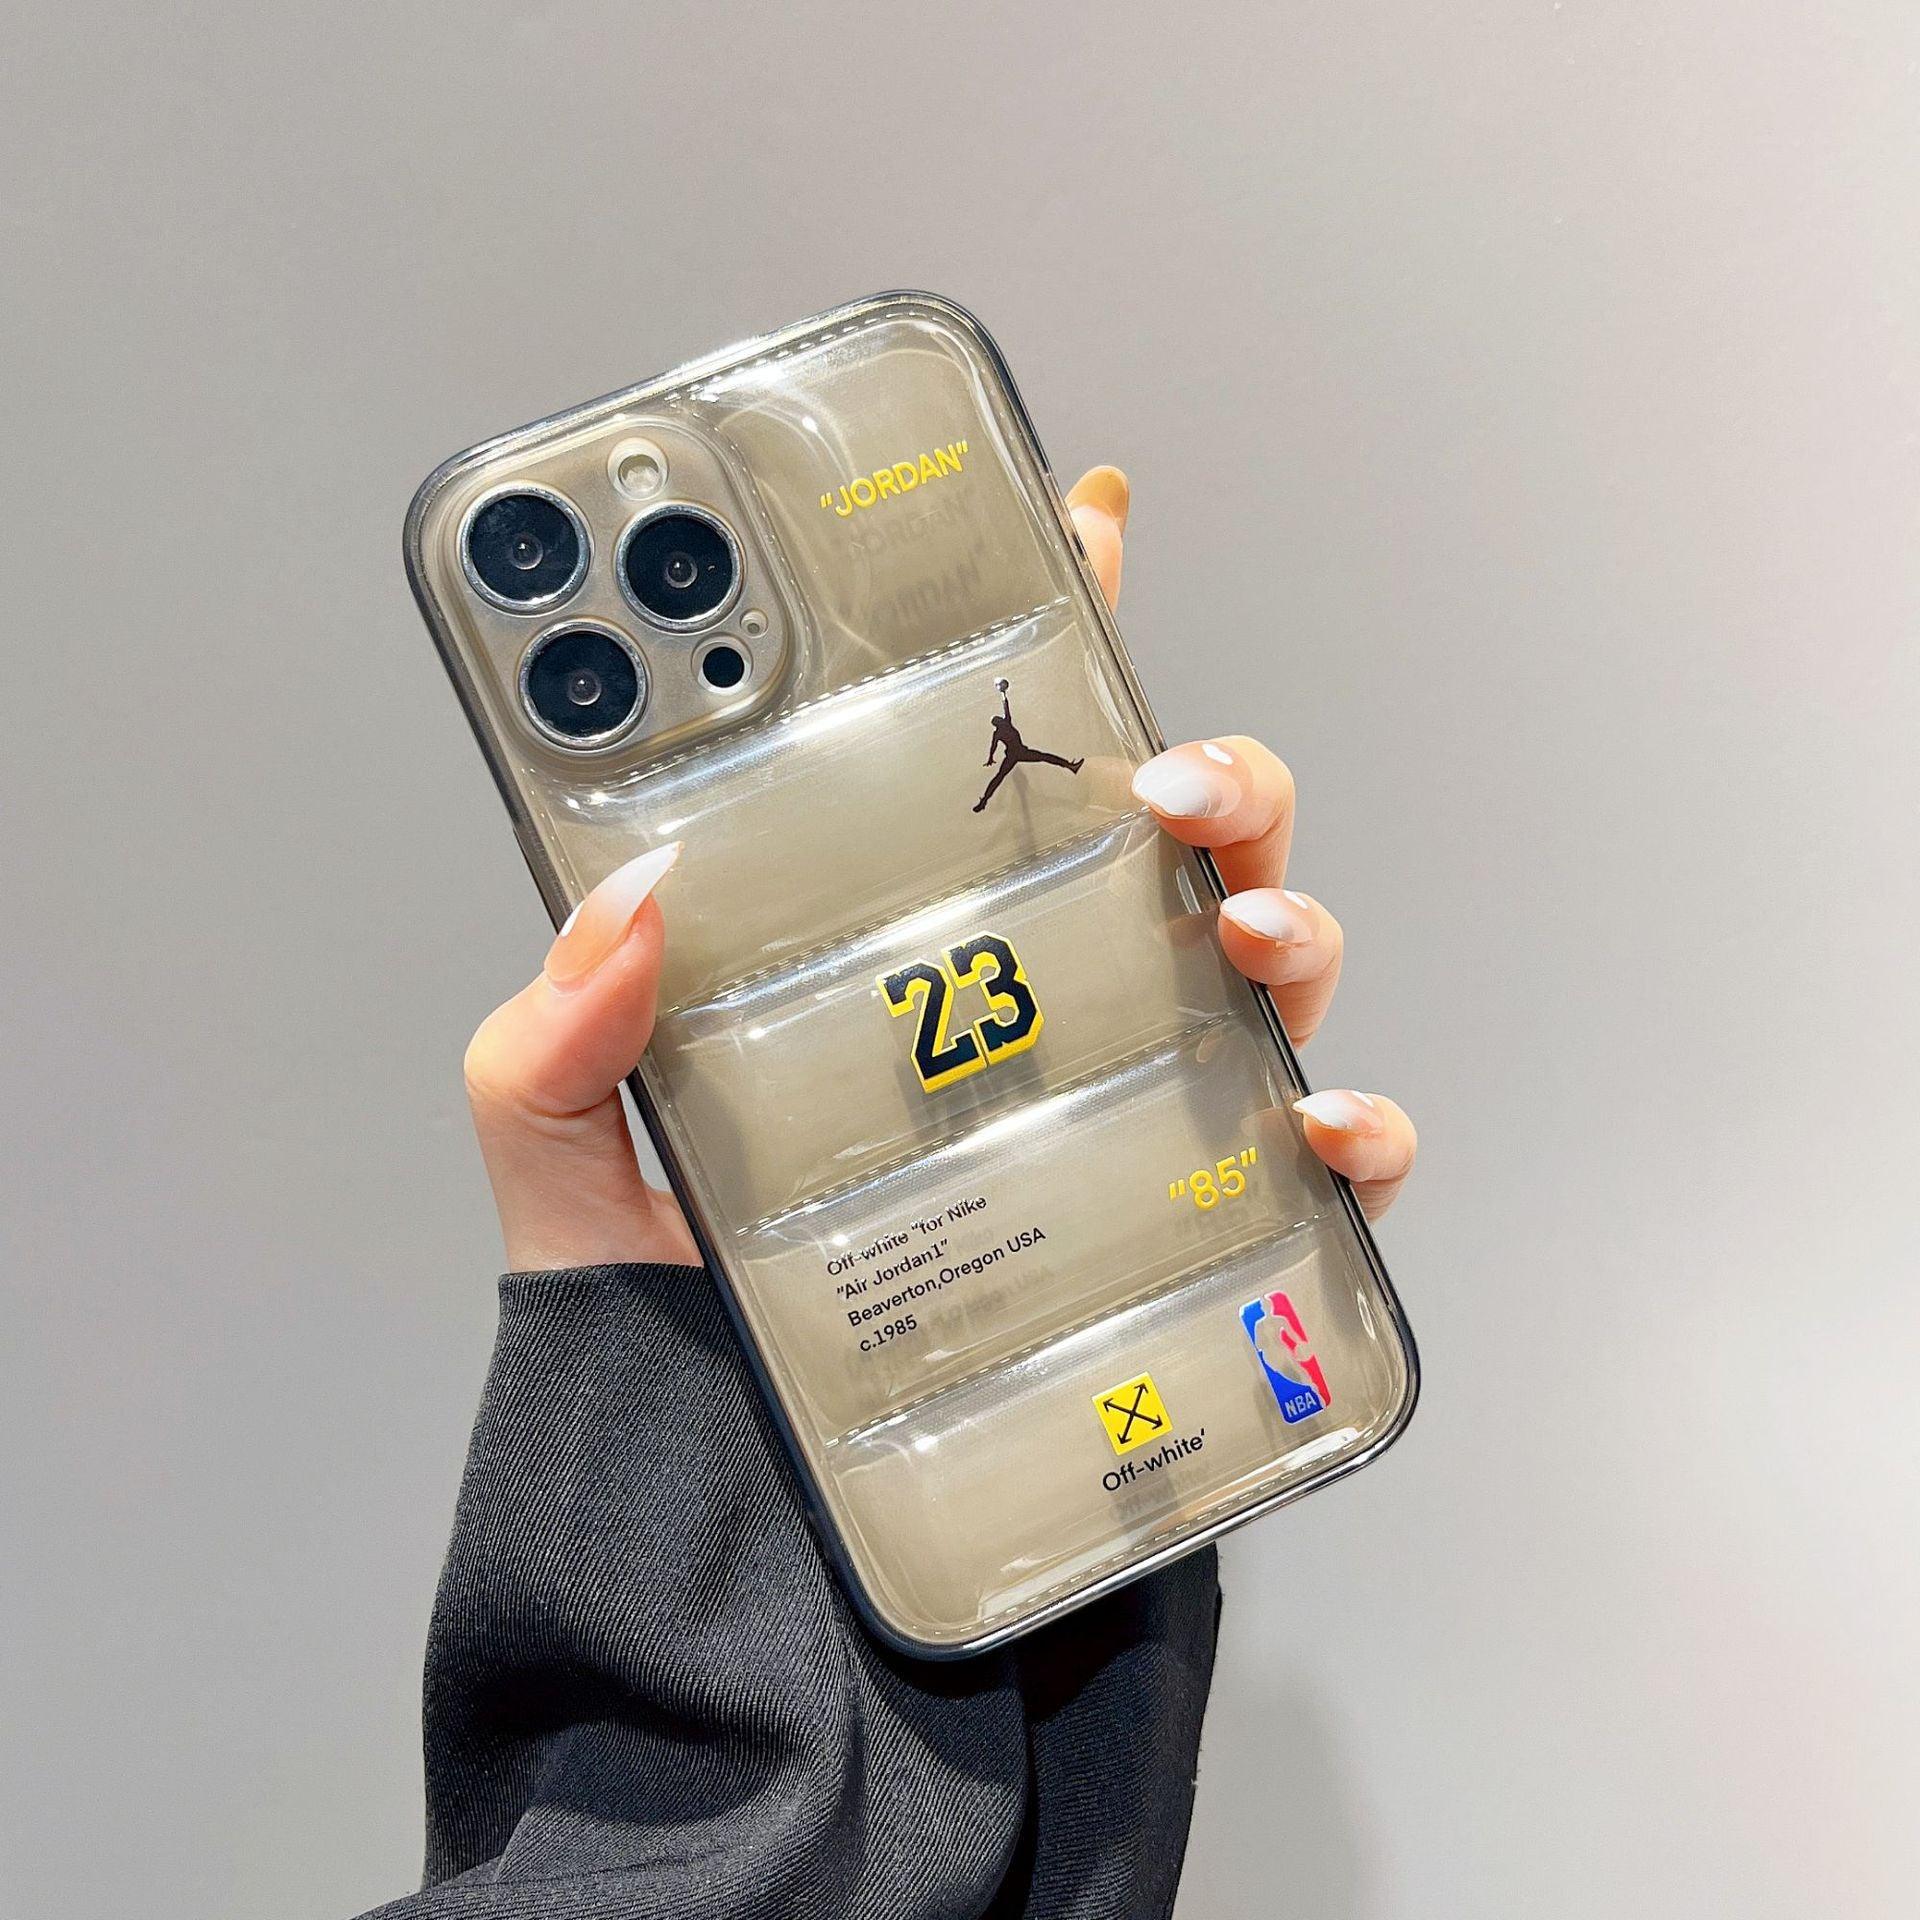 Transparent iPhone Case - NorthFace